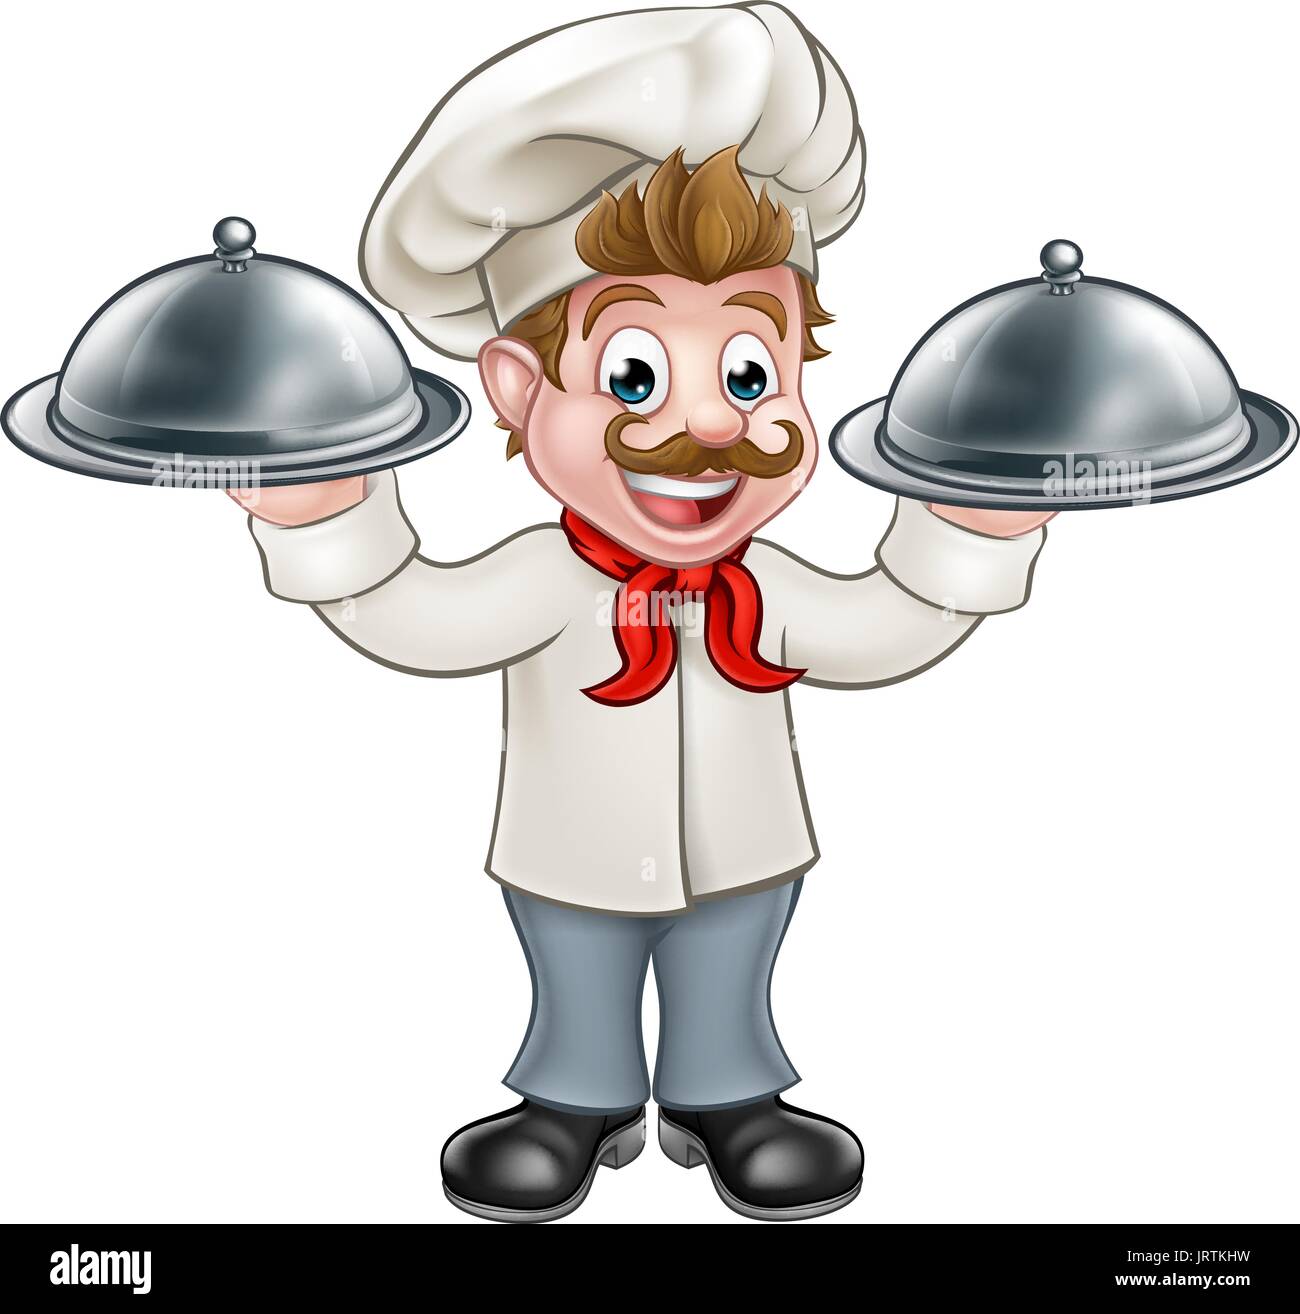 Chef Koch Cartoon-Charakter-Maskottchen Stock-Vektorgrafik - Alamy